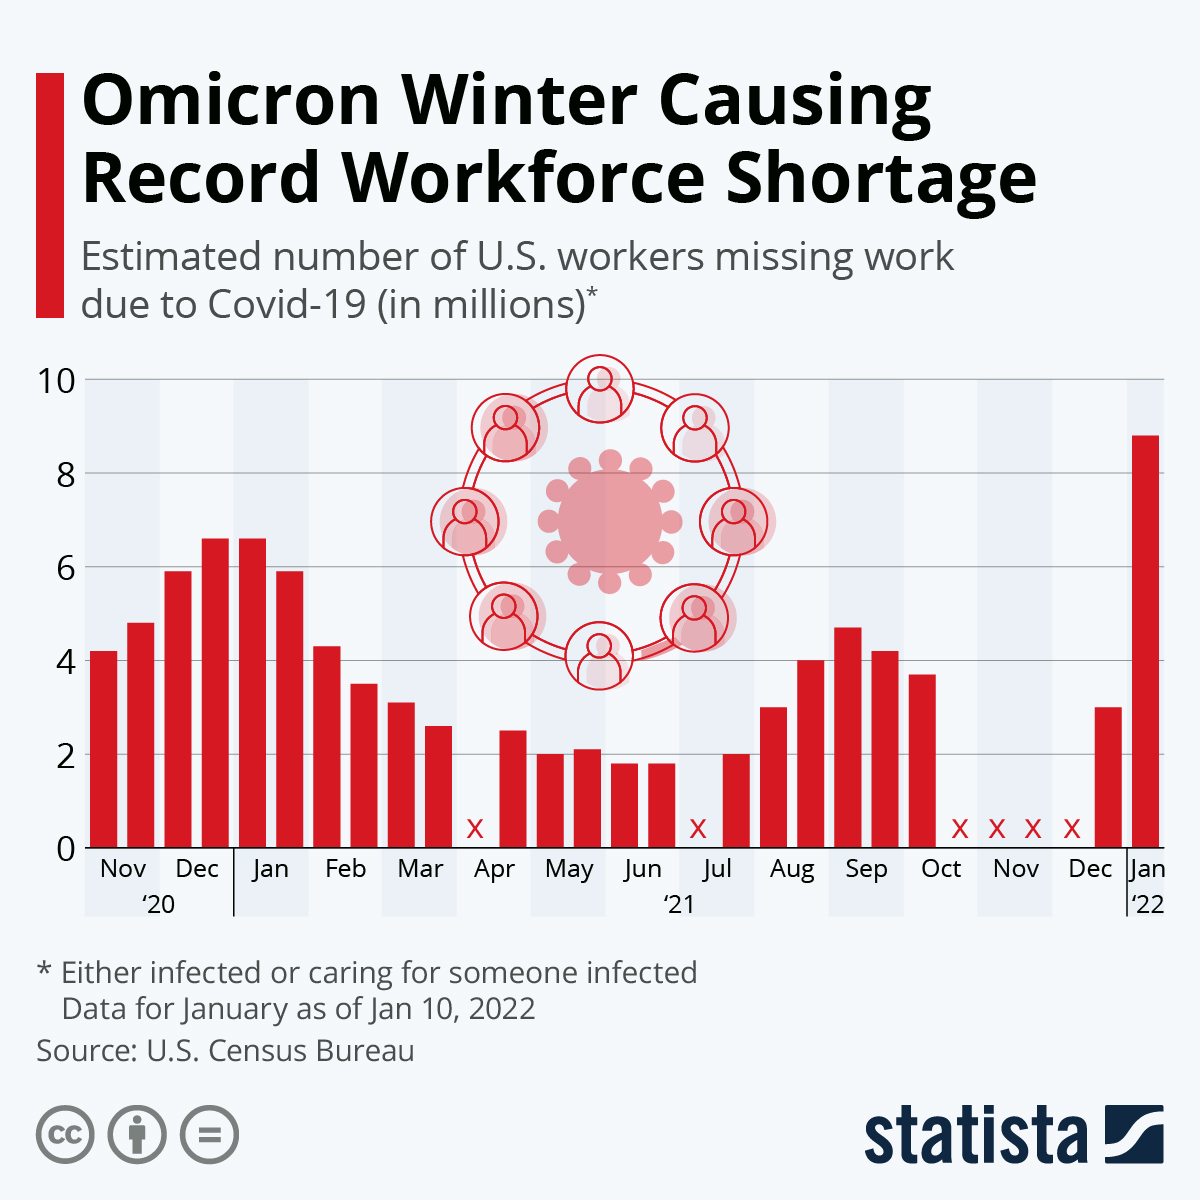 Omicron Winter Causing Record Workforce Shortage